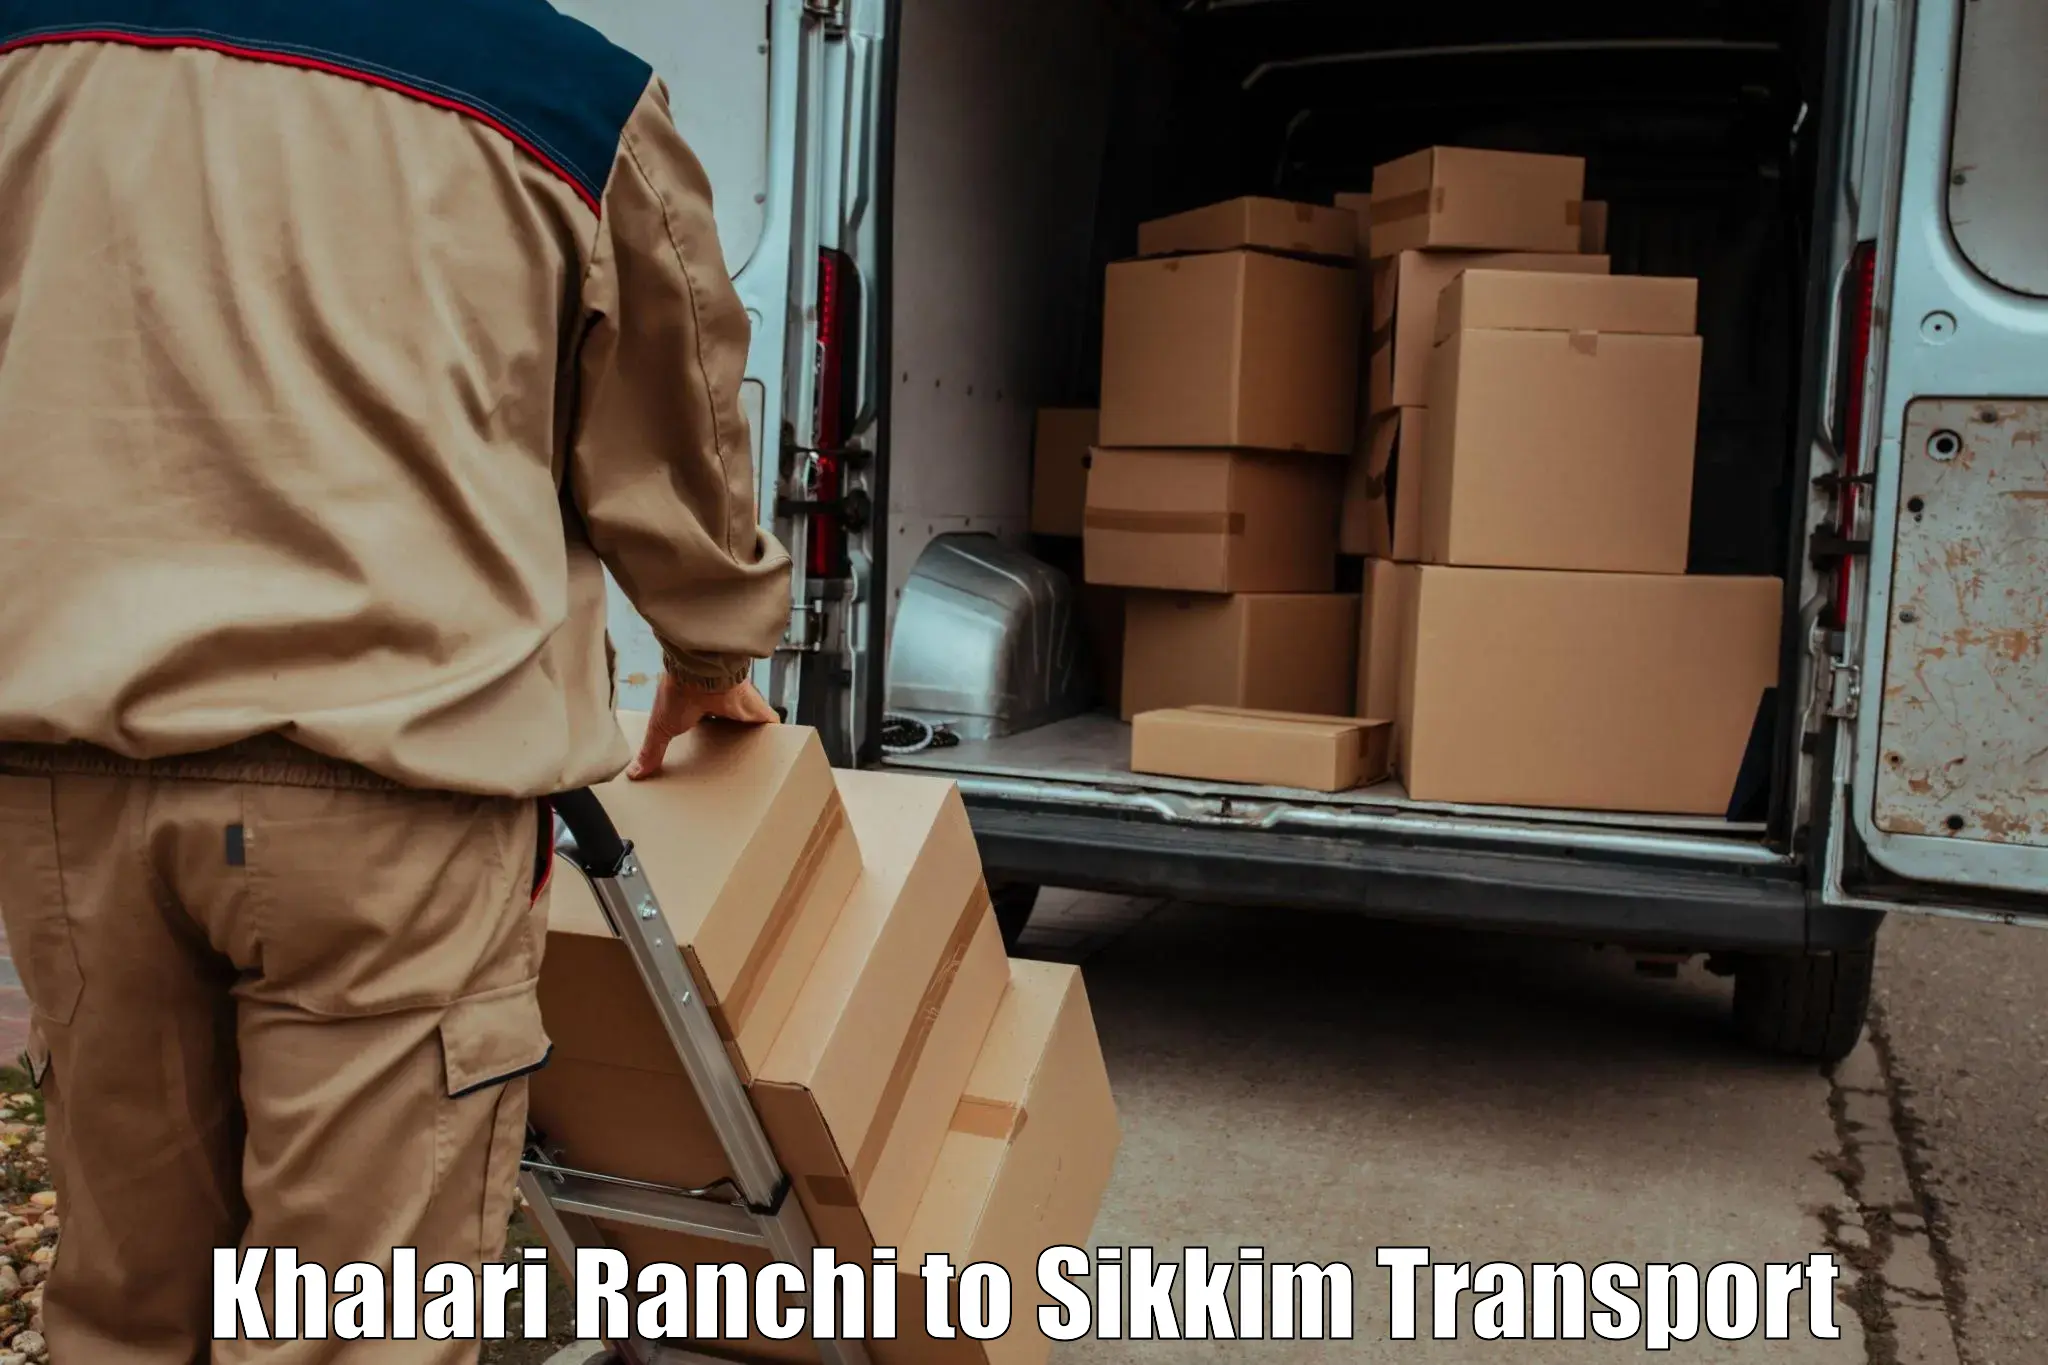 Lorry transport service Khalari Ranchi to Sikkim